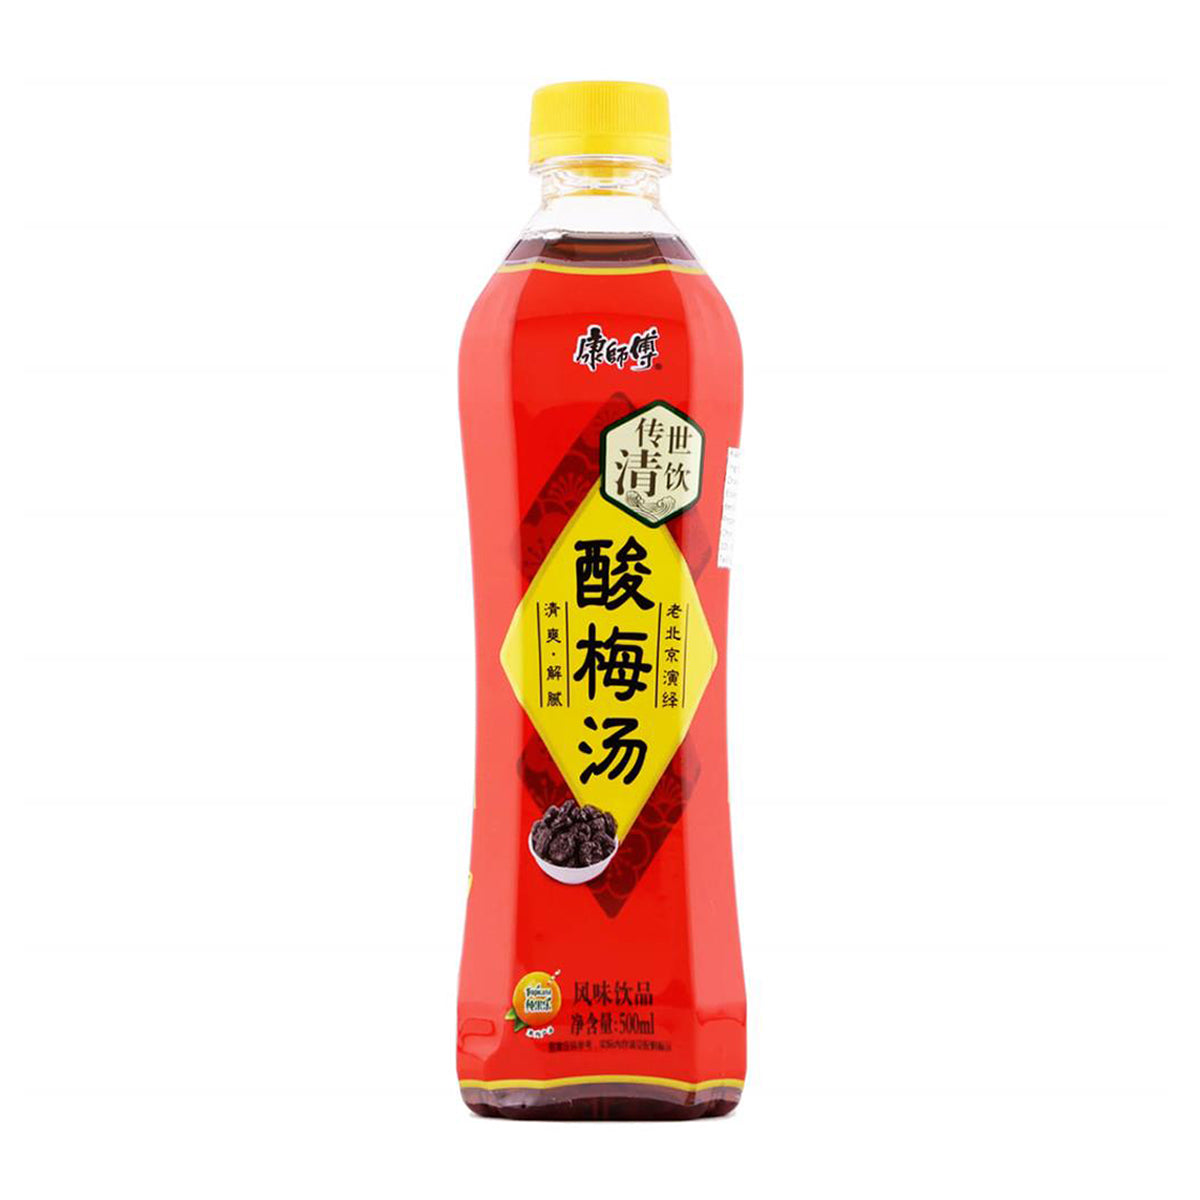 master kong syrup of plum - 500ml